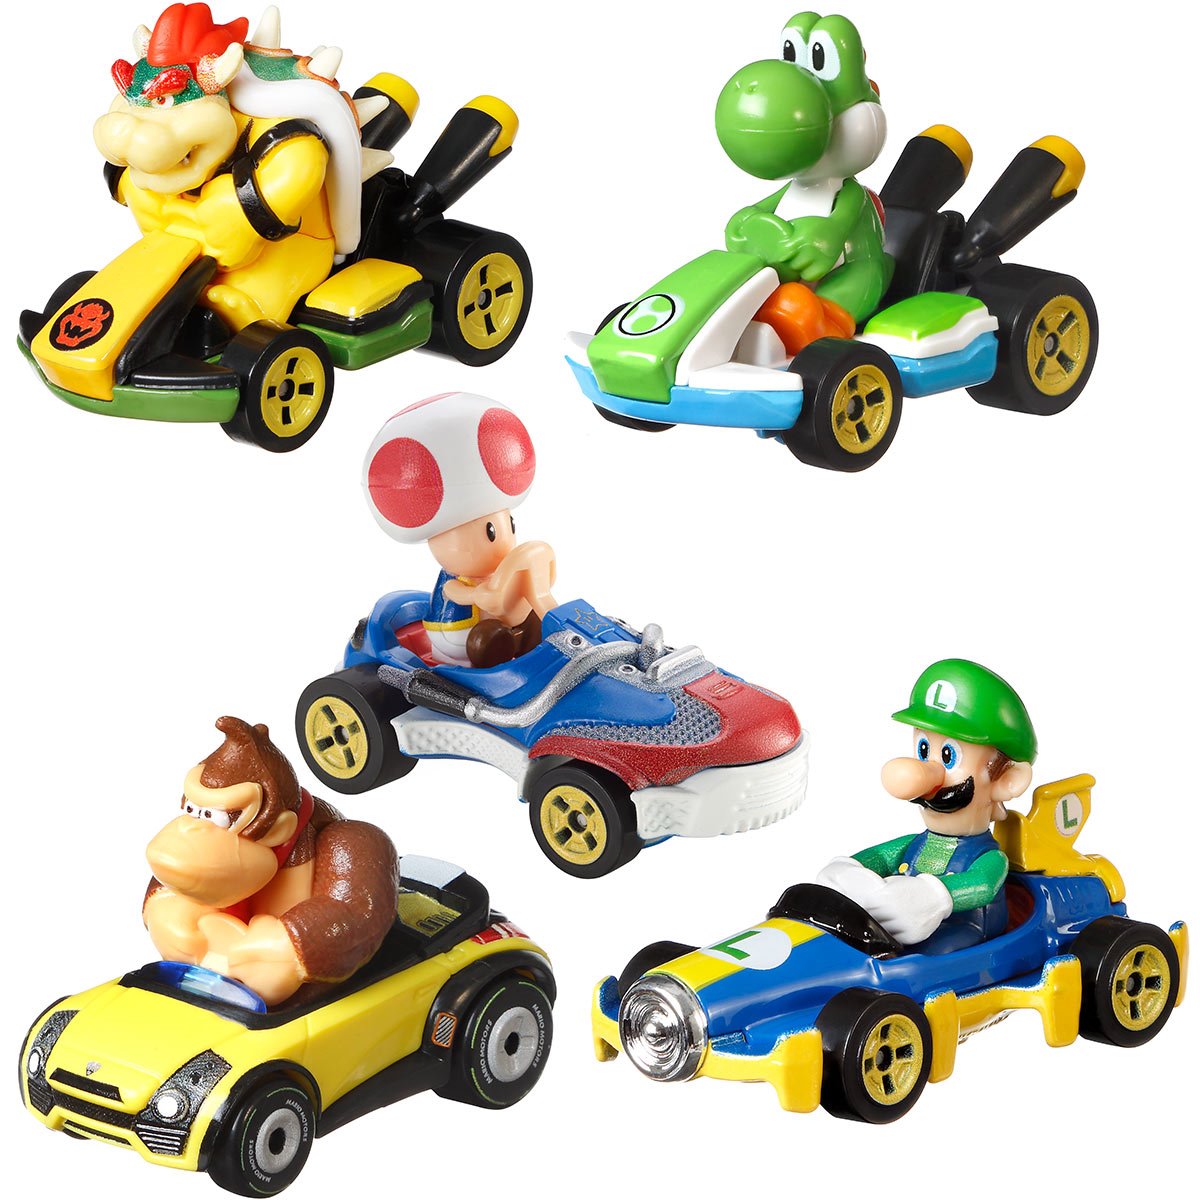 Nintendo, Mattel Speed Ahead with 'Mario Kart' Hot Wheels